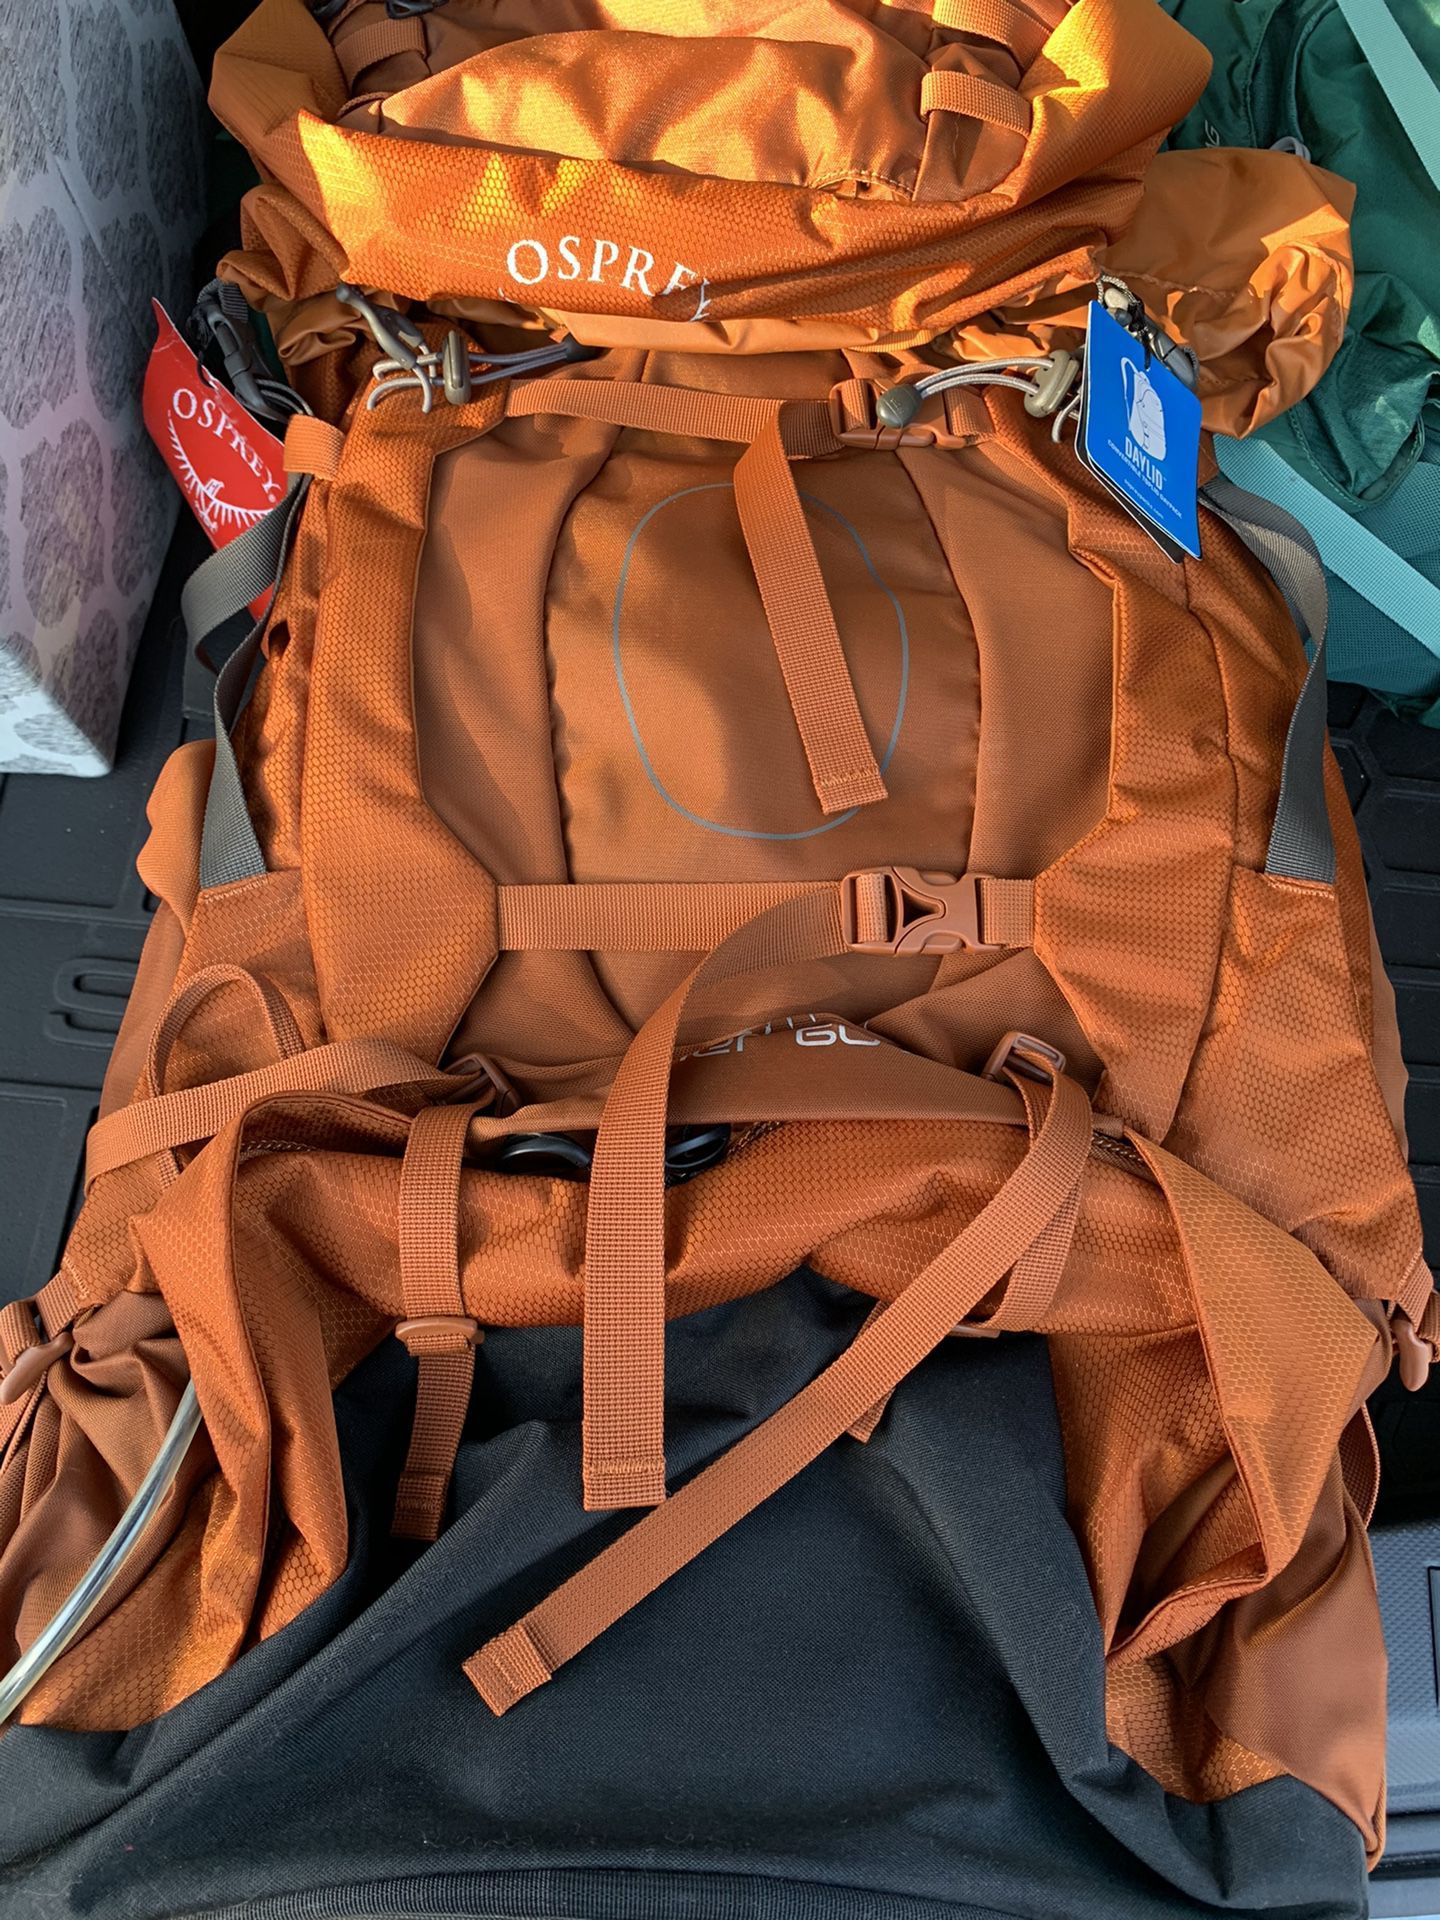 Osprey Camping Overnight Backpack